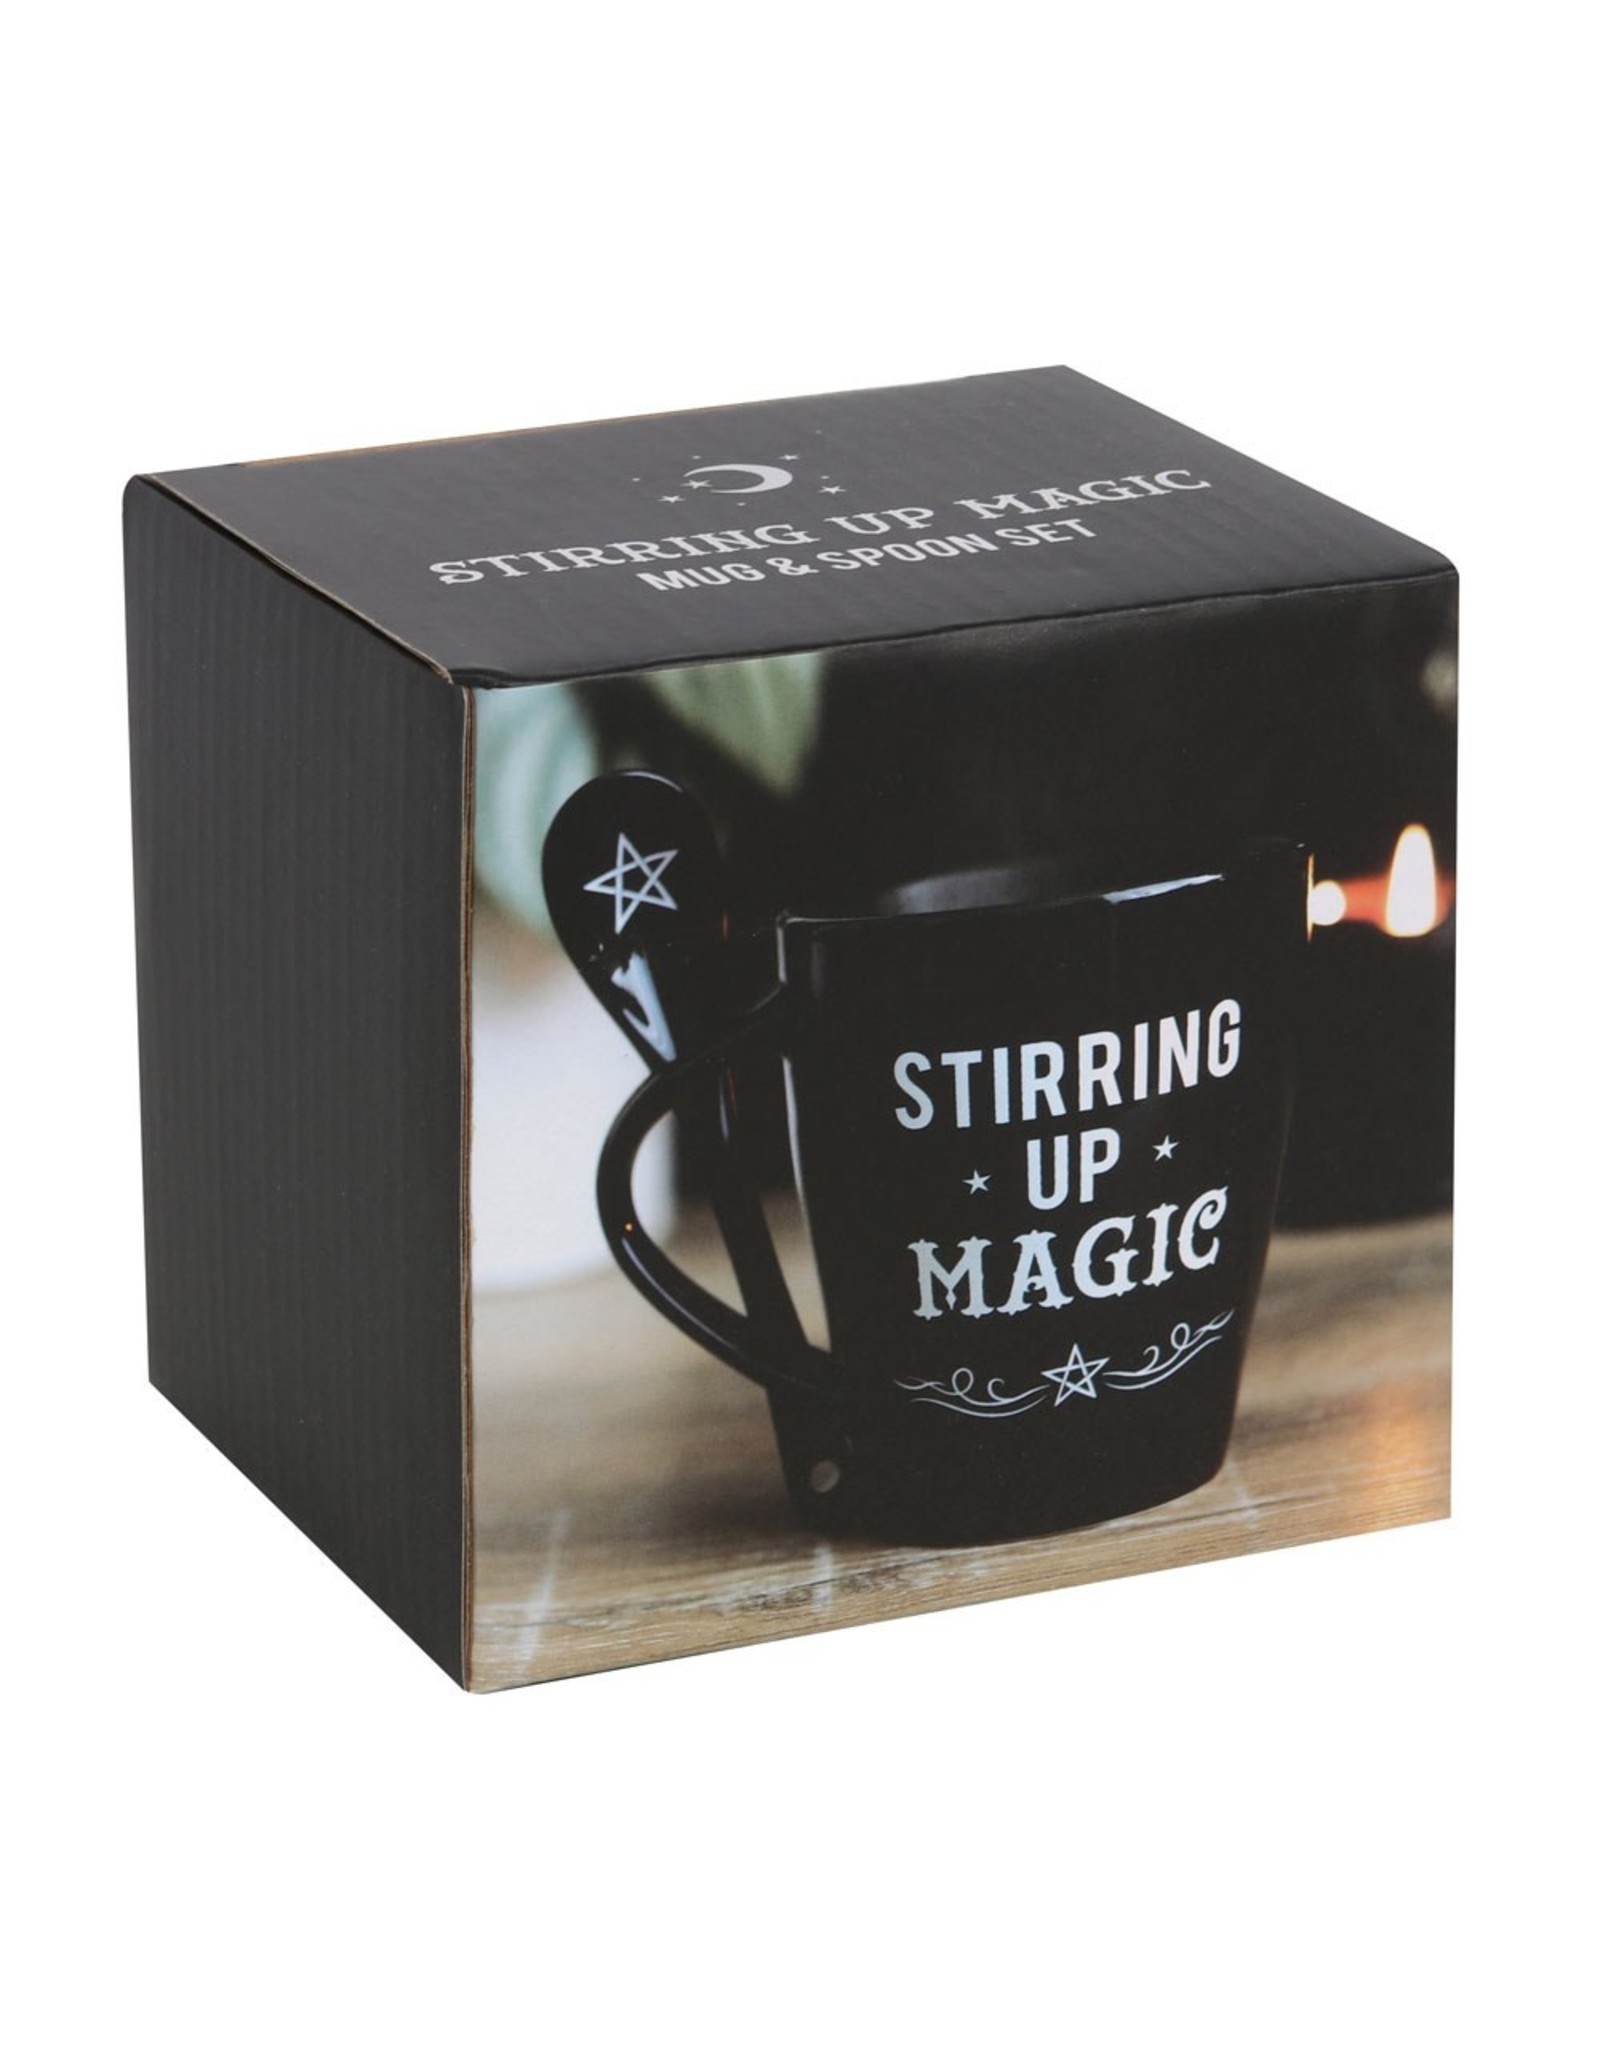 Something Different Giftware & Lifestyle - Stirring Up Magic Mug and Spoon set